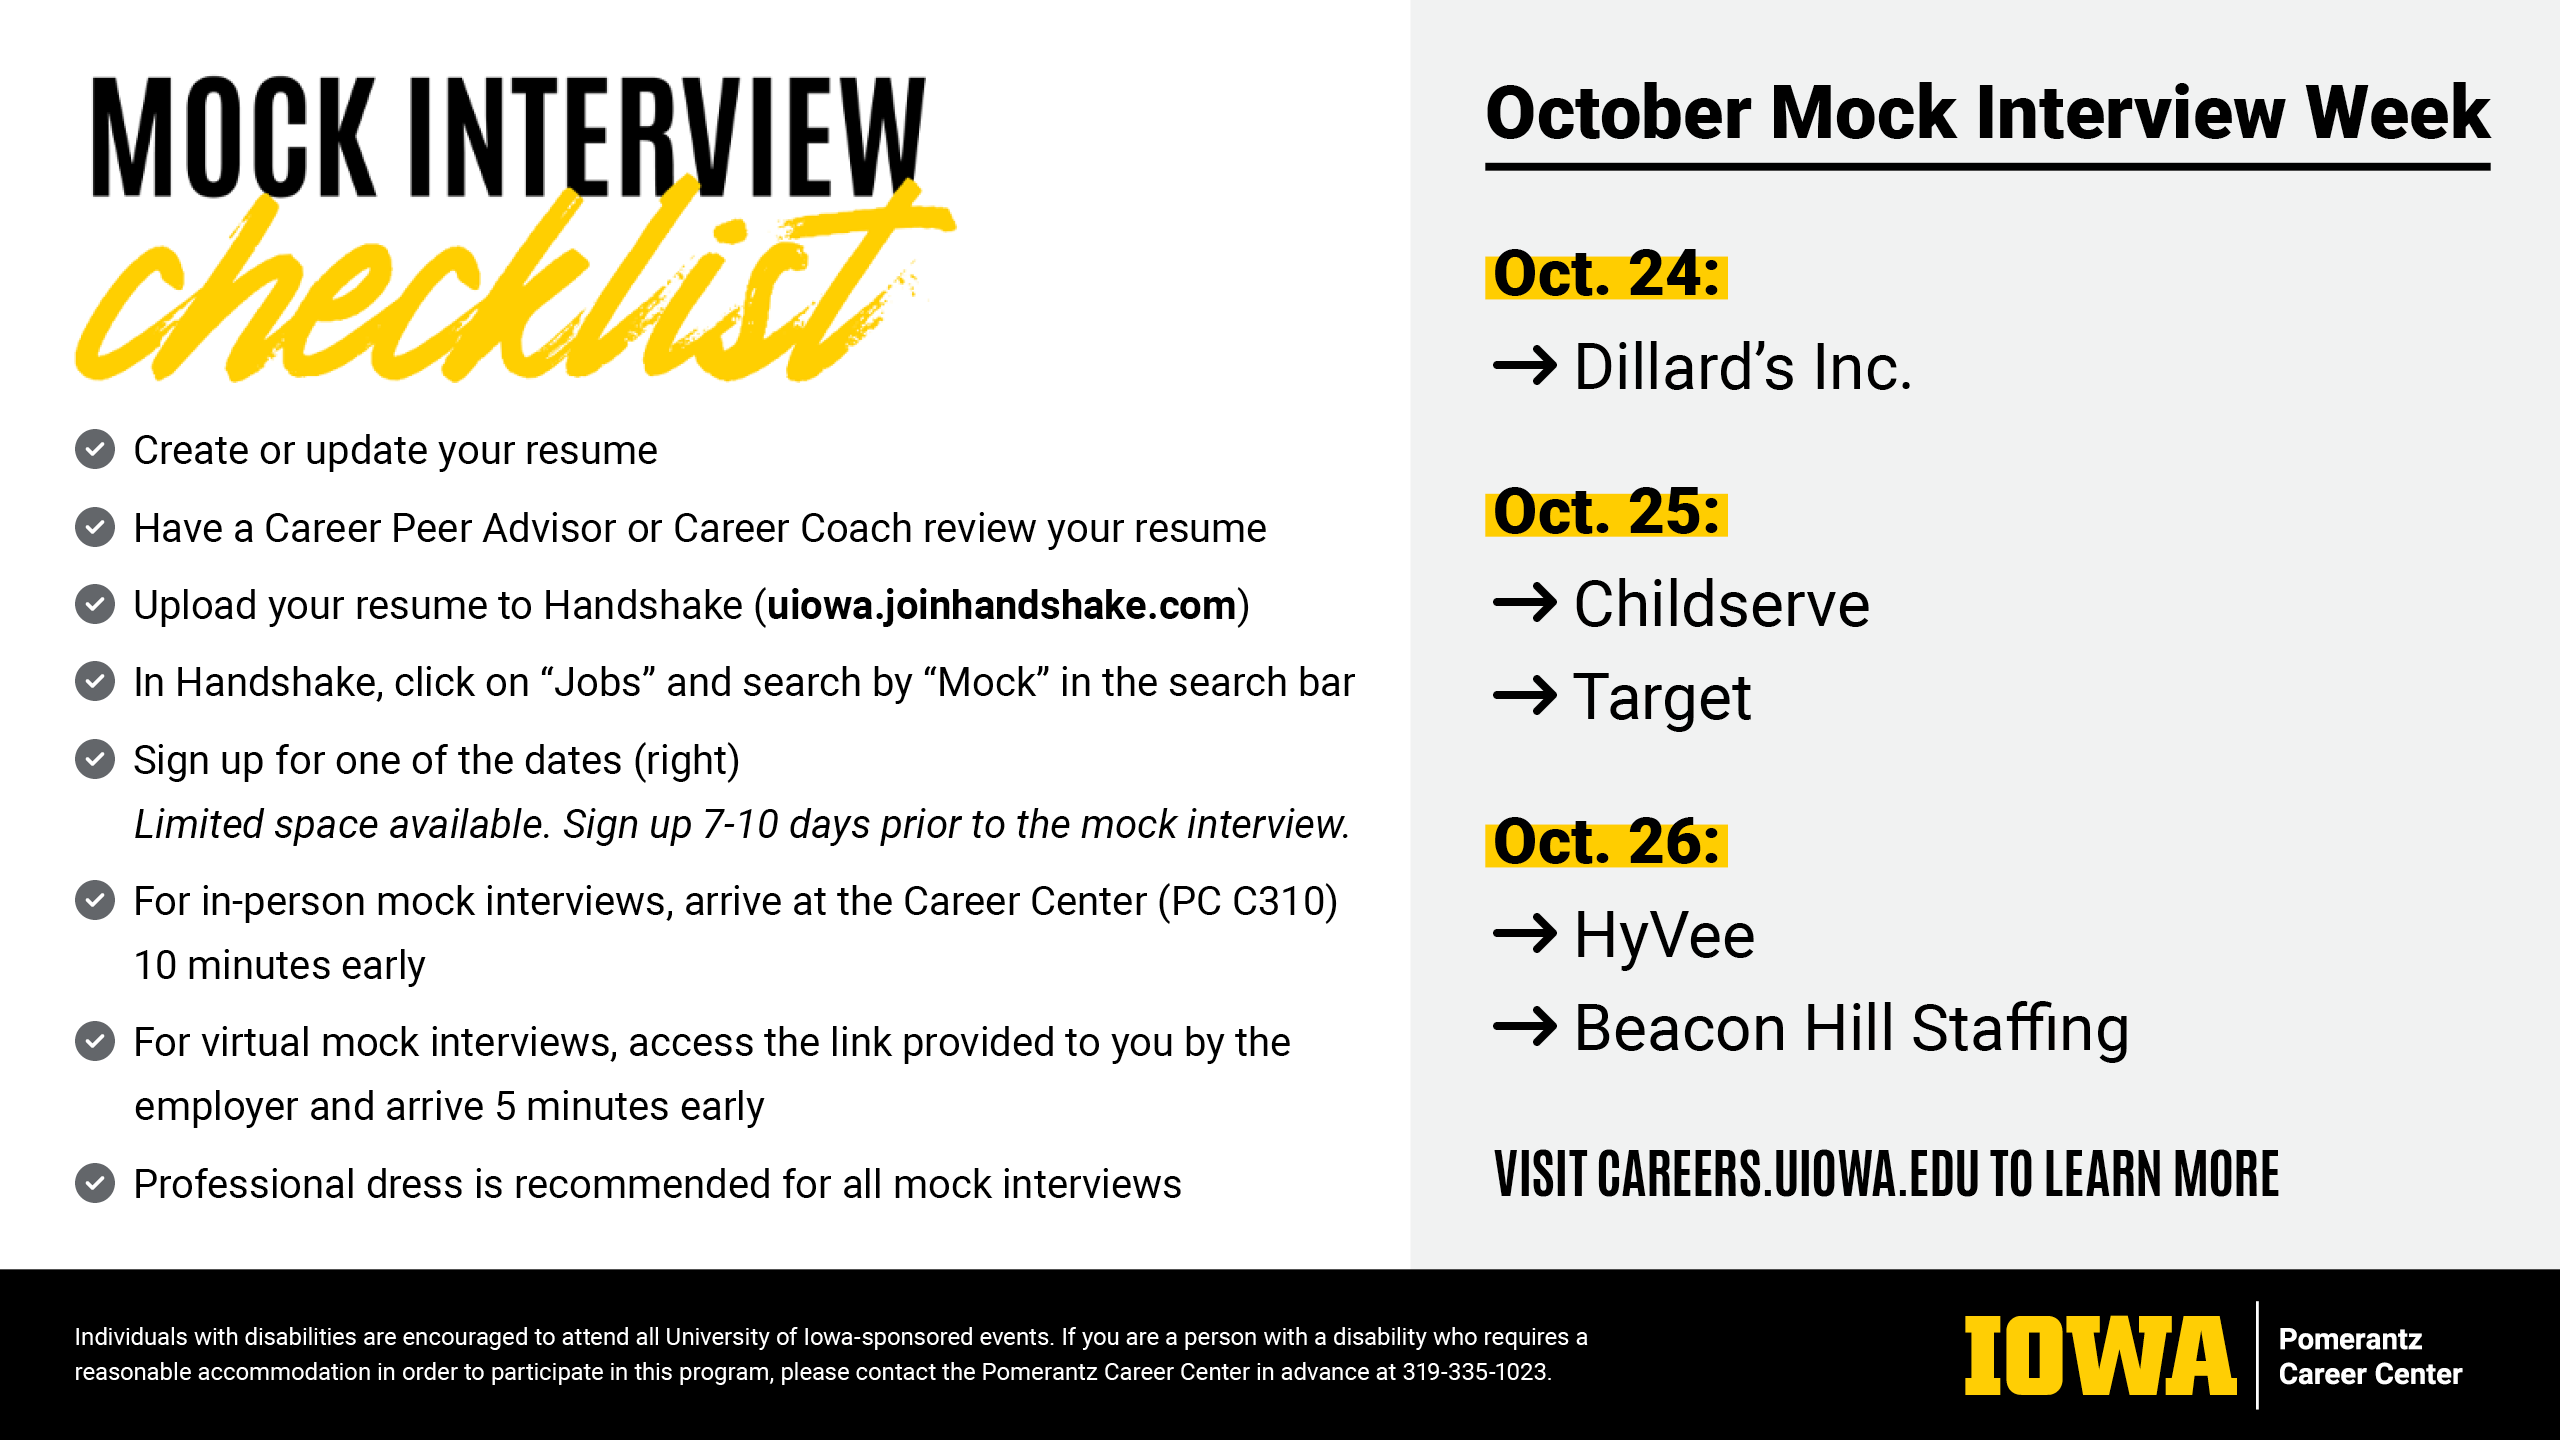 October Mock Interviews - Oct 24: Dillard's Inc., Oct 25: Childserve & Target, Oct 26: HyVee & Beacon Hill Staffing